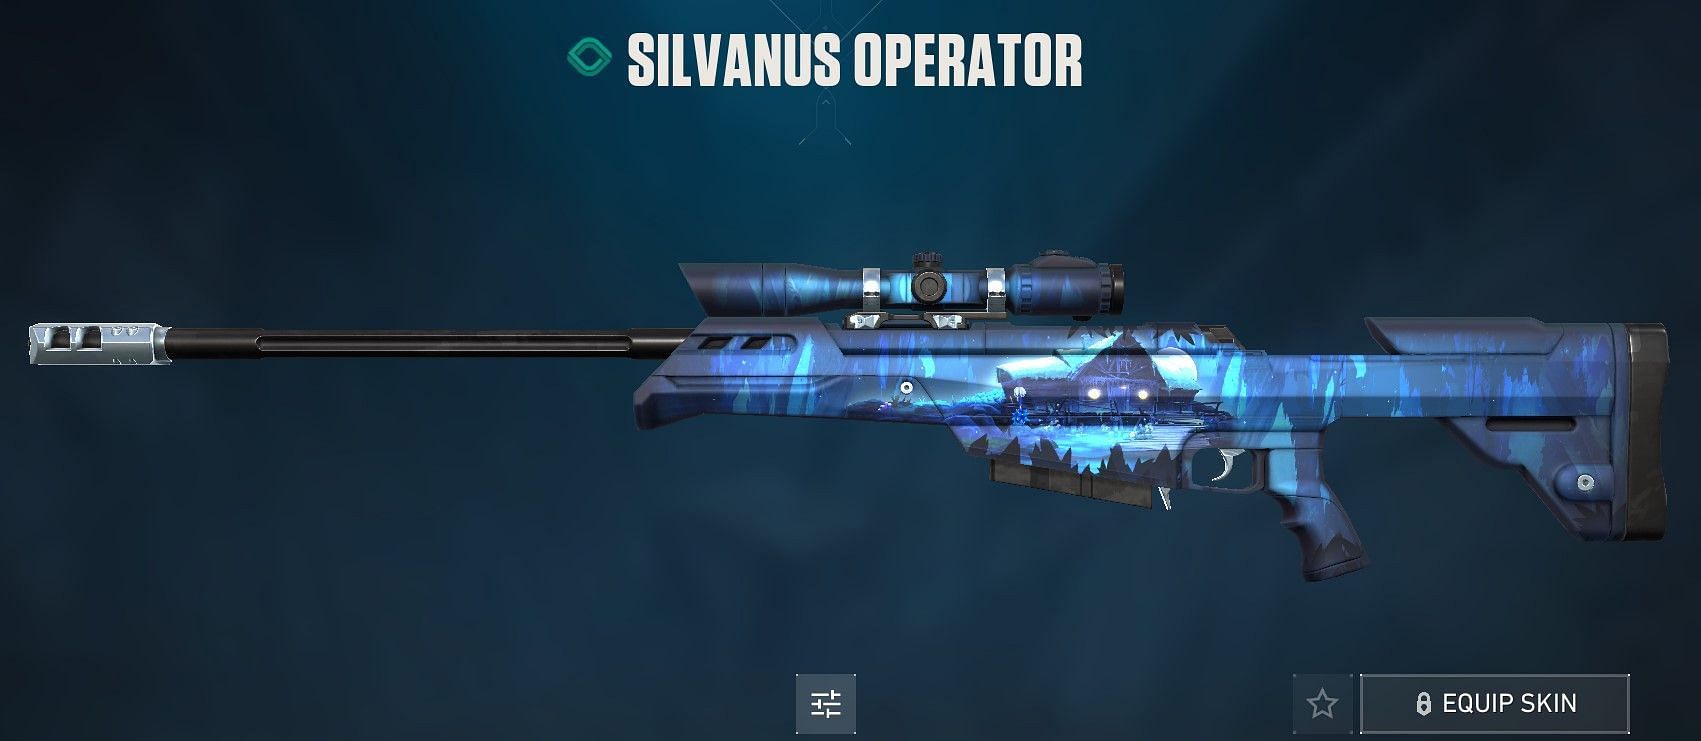 Silvanus Operator (Image via Riot Games)